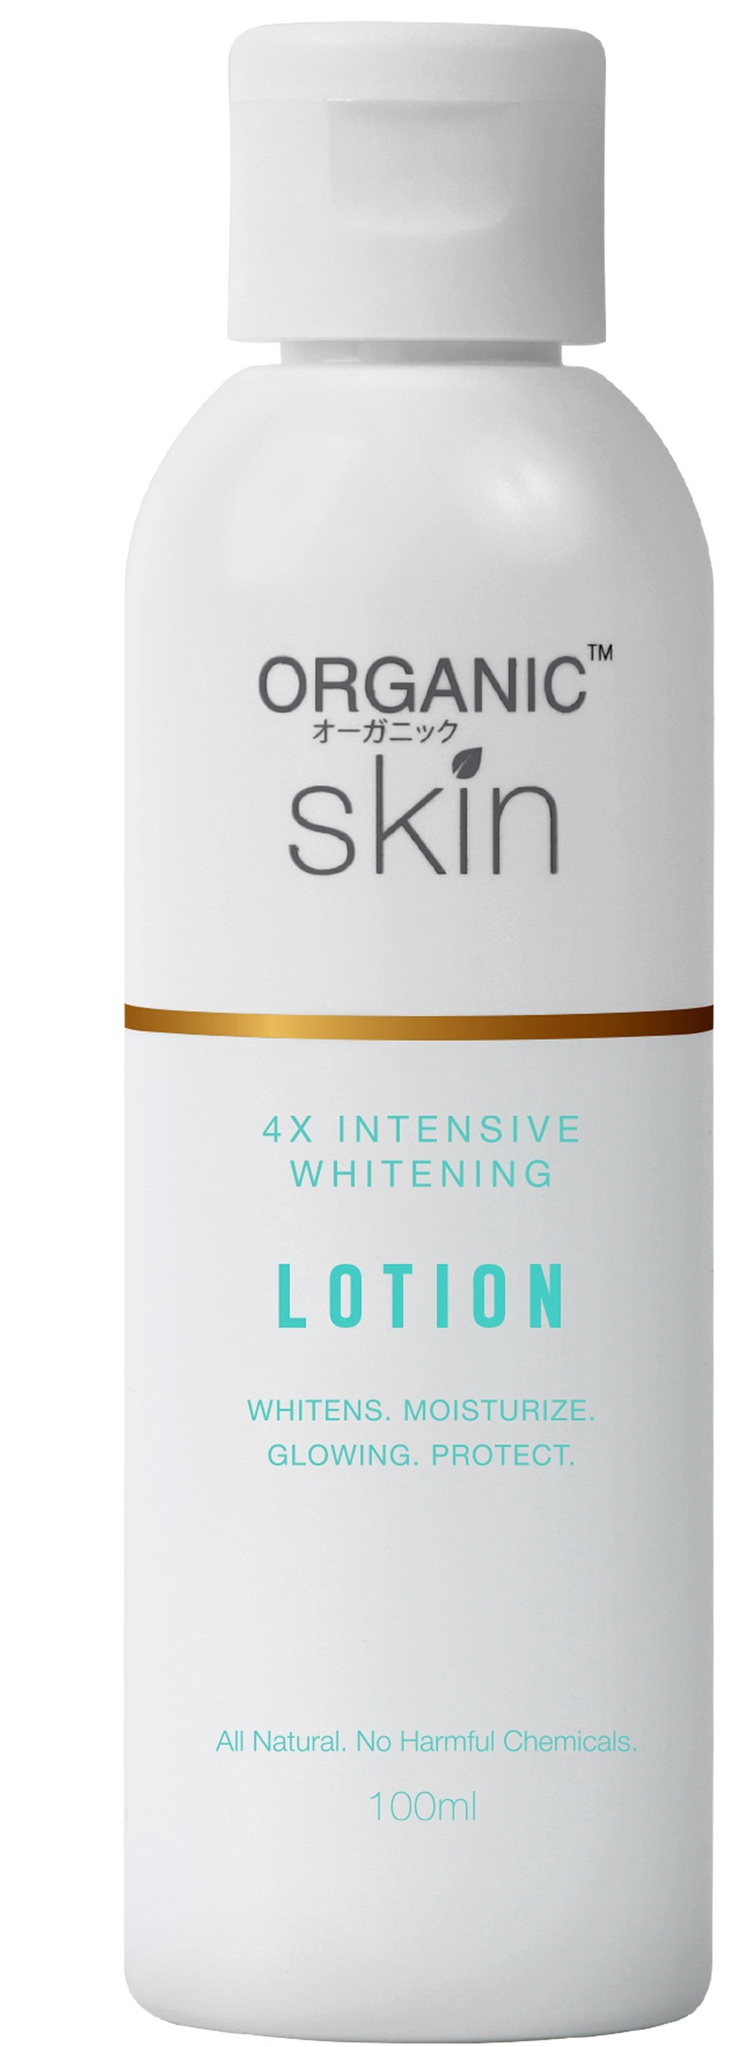 Organic Skin Japan 4x Intensive Whitening Lotion With Vitamin C